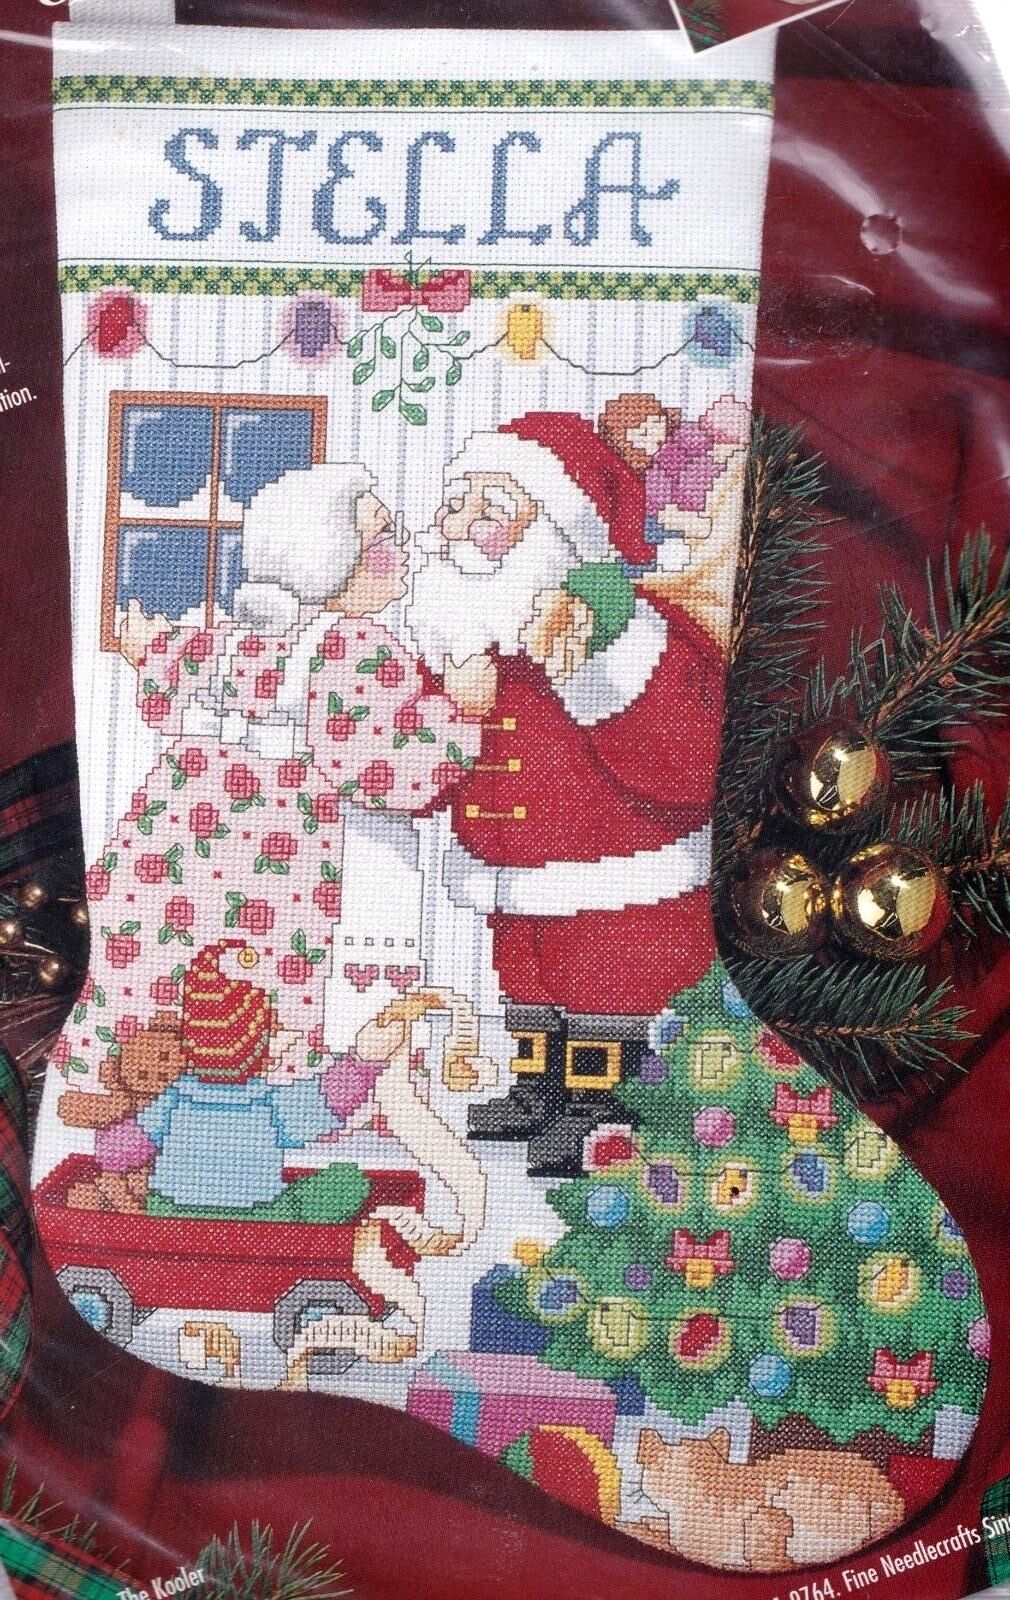 DIY Bucilla Kissin Claus Santa Christmas Counted Cross Stitch Stocking Kit 83437